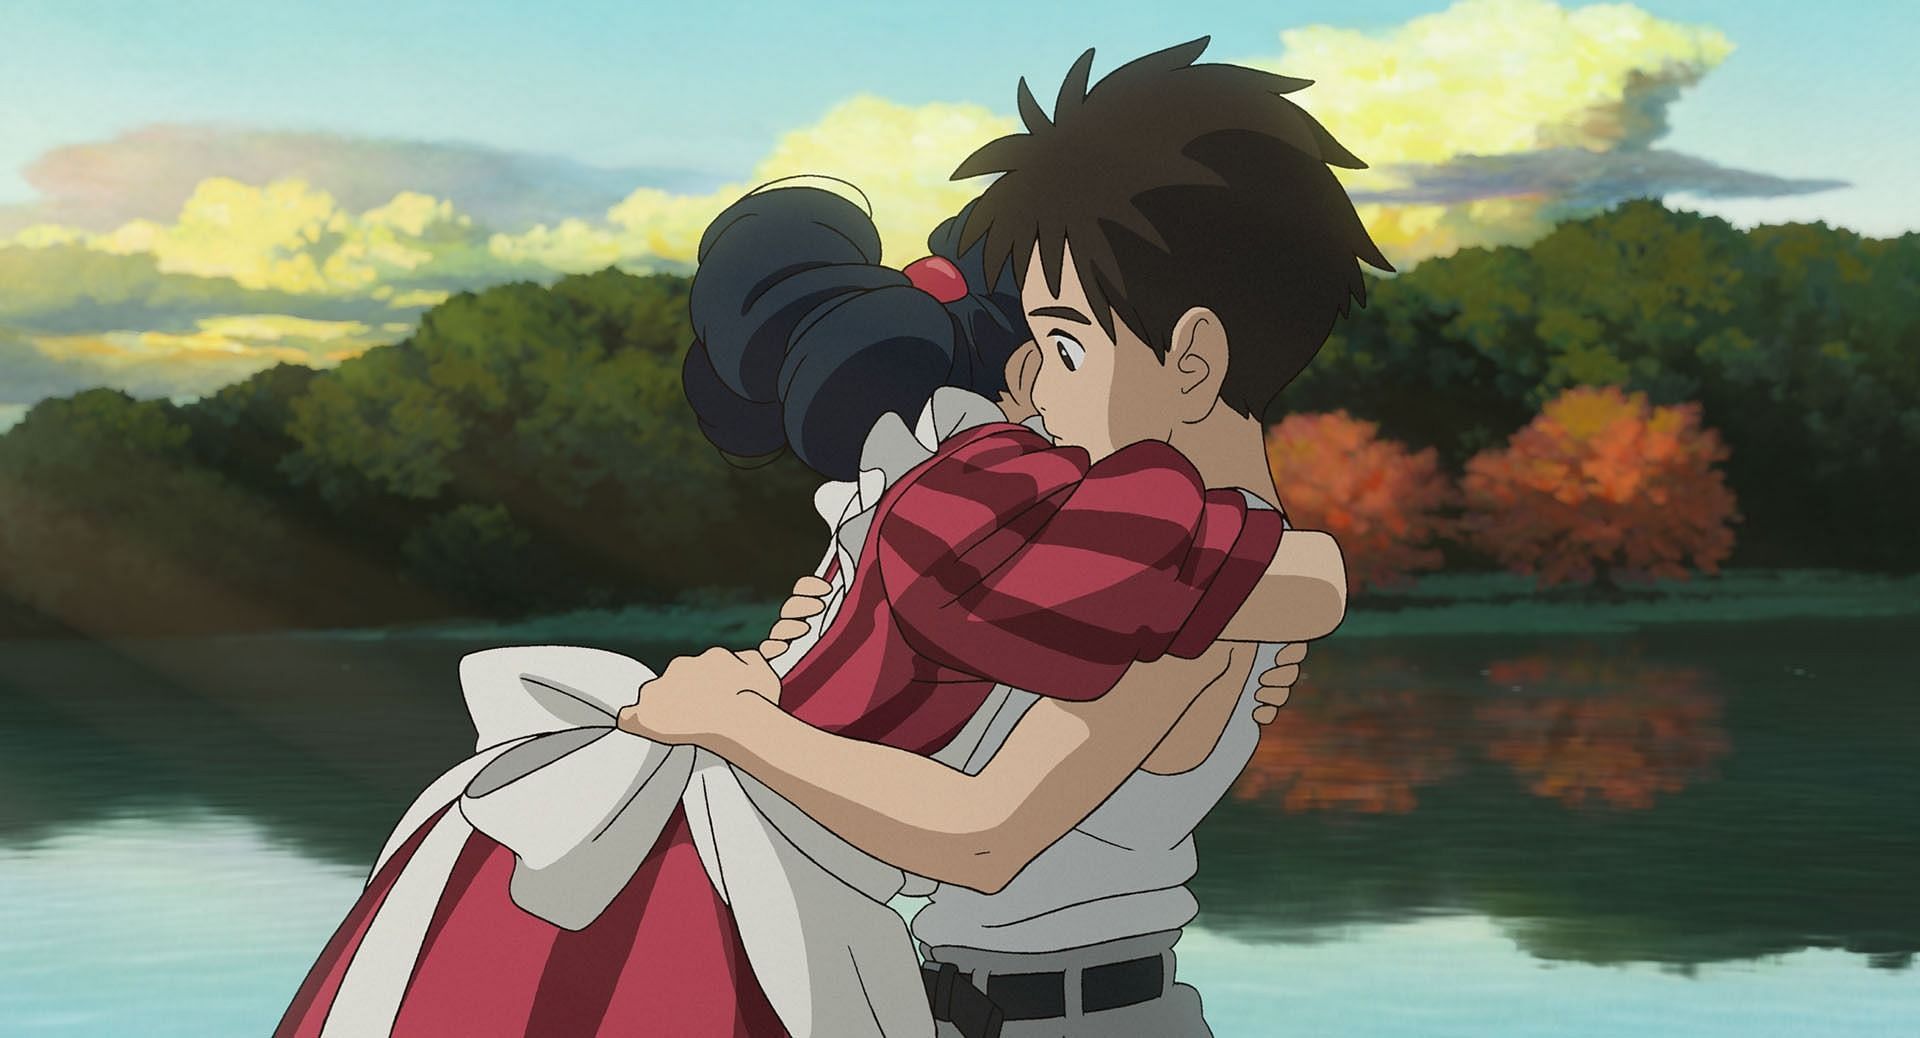 Himi hugging Mahito as seen in The Boy and the Heron movie (Image via Studio Ghibli)